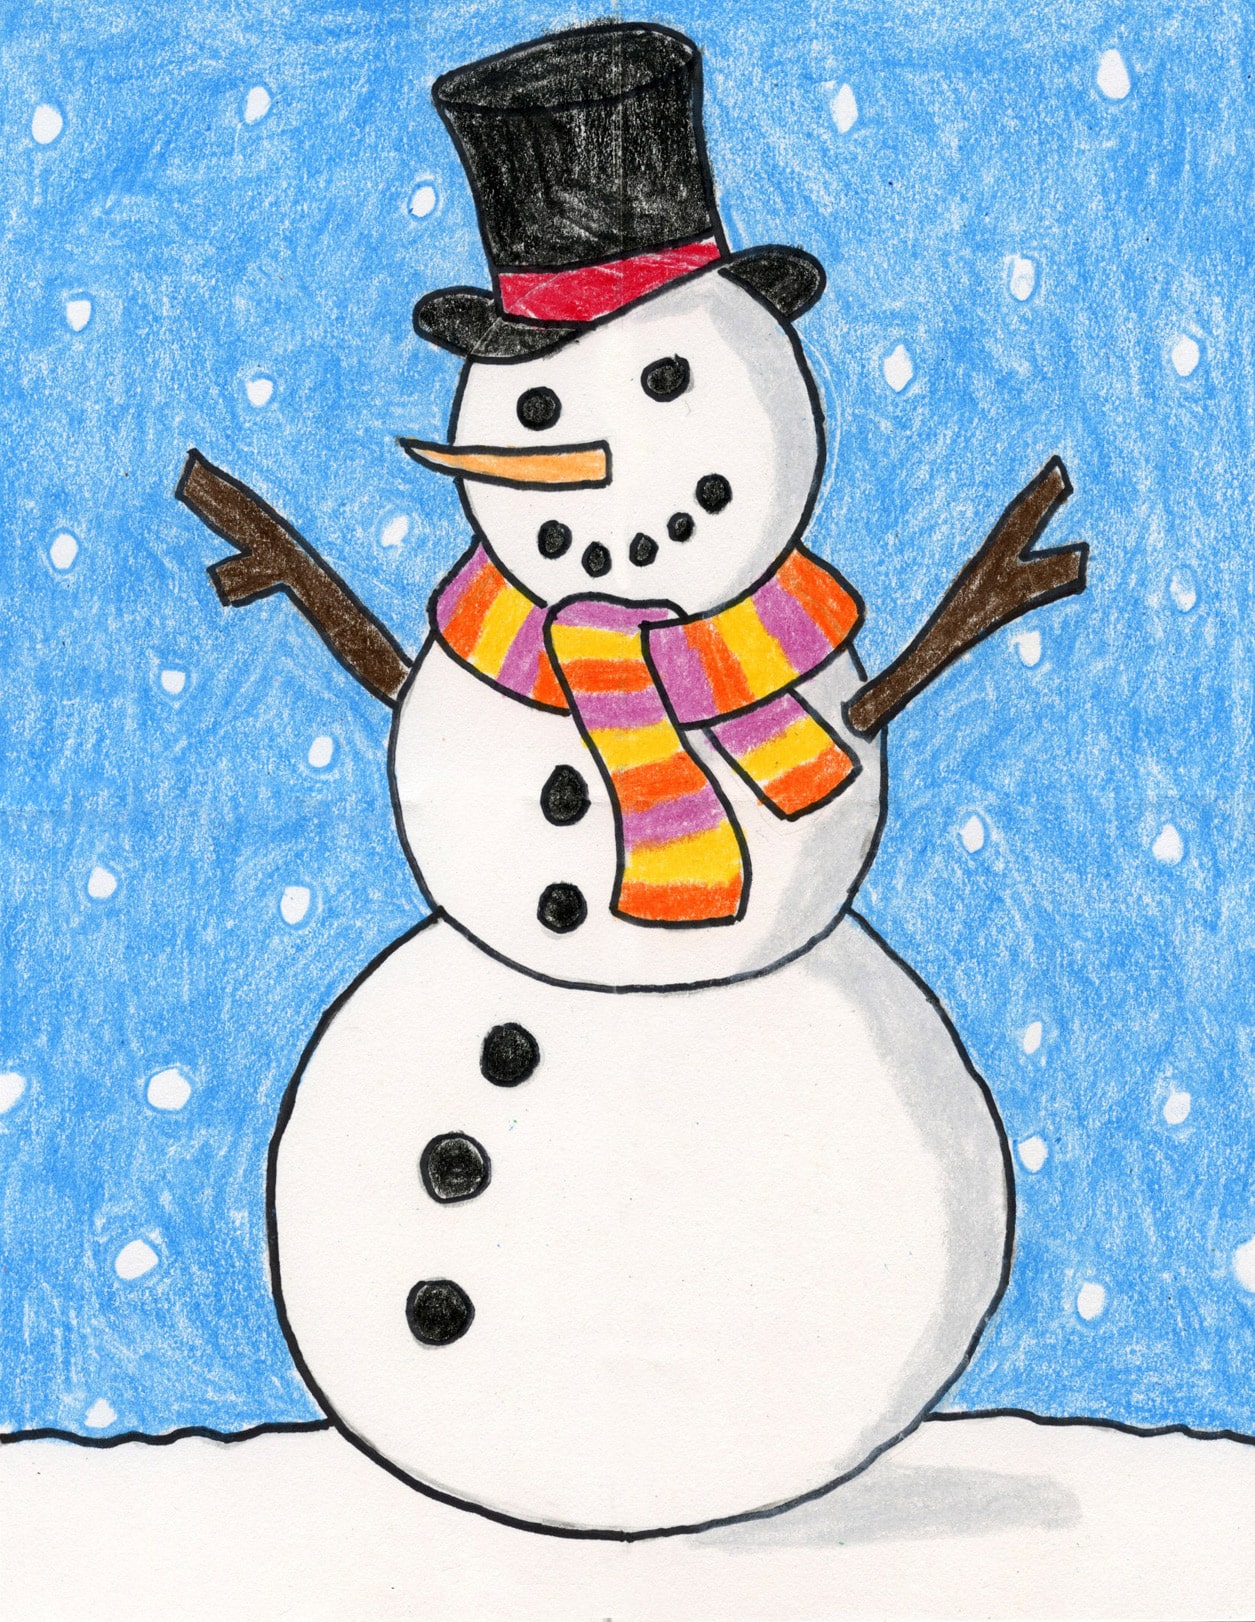 Do you want to build a snowman? – Princess Lodges